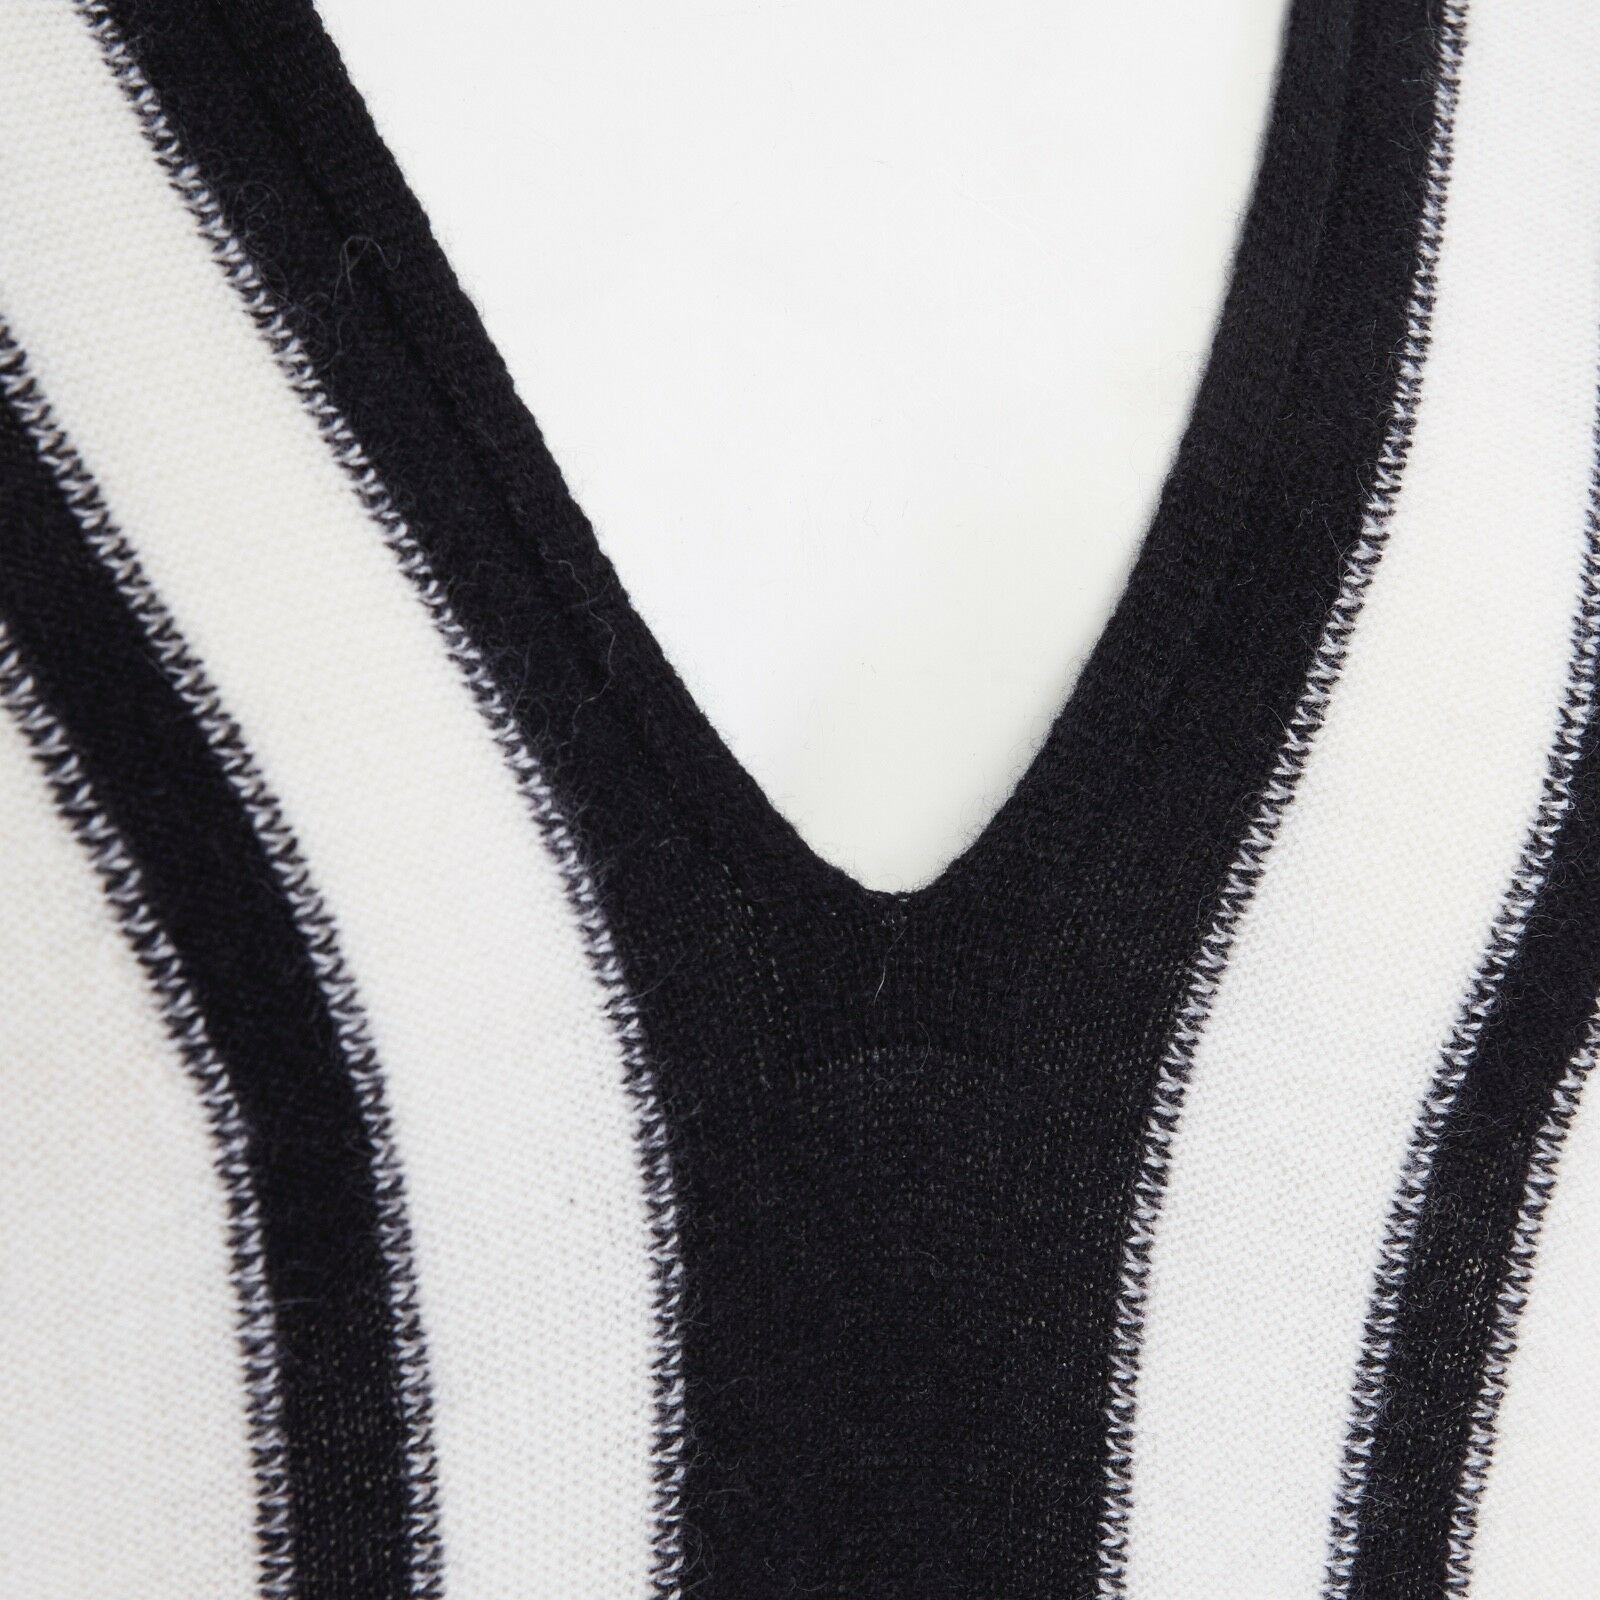 Women's VINCE cashmere cream black striped V-neck varsity sweater top S